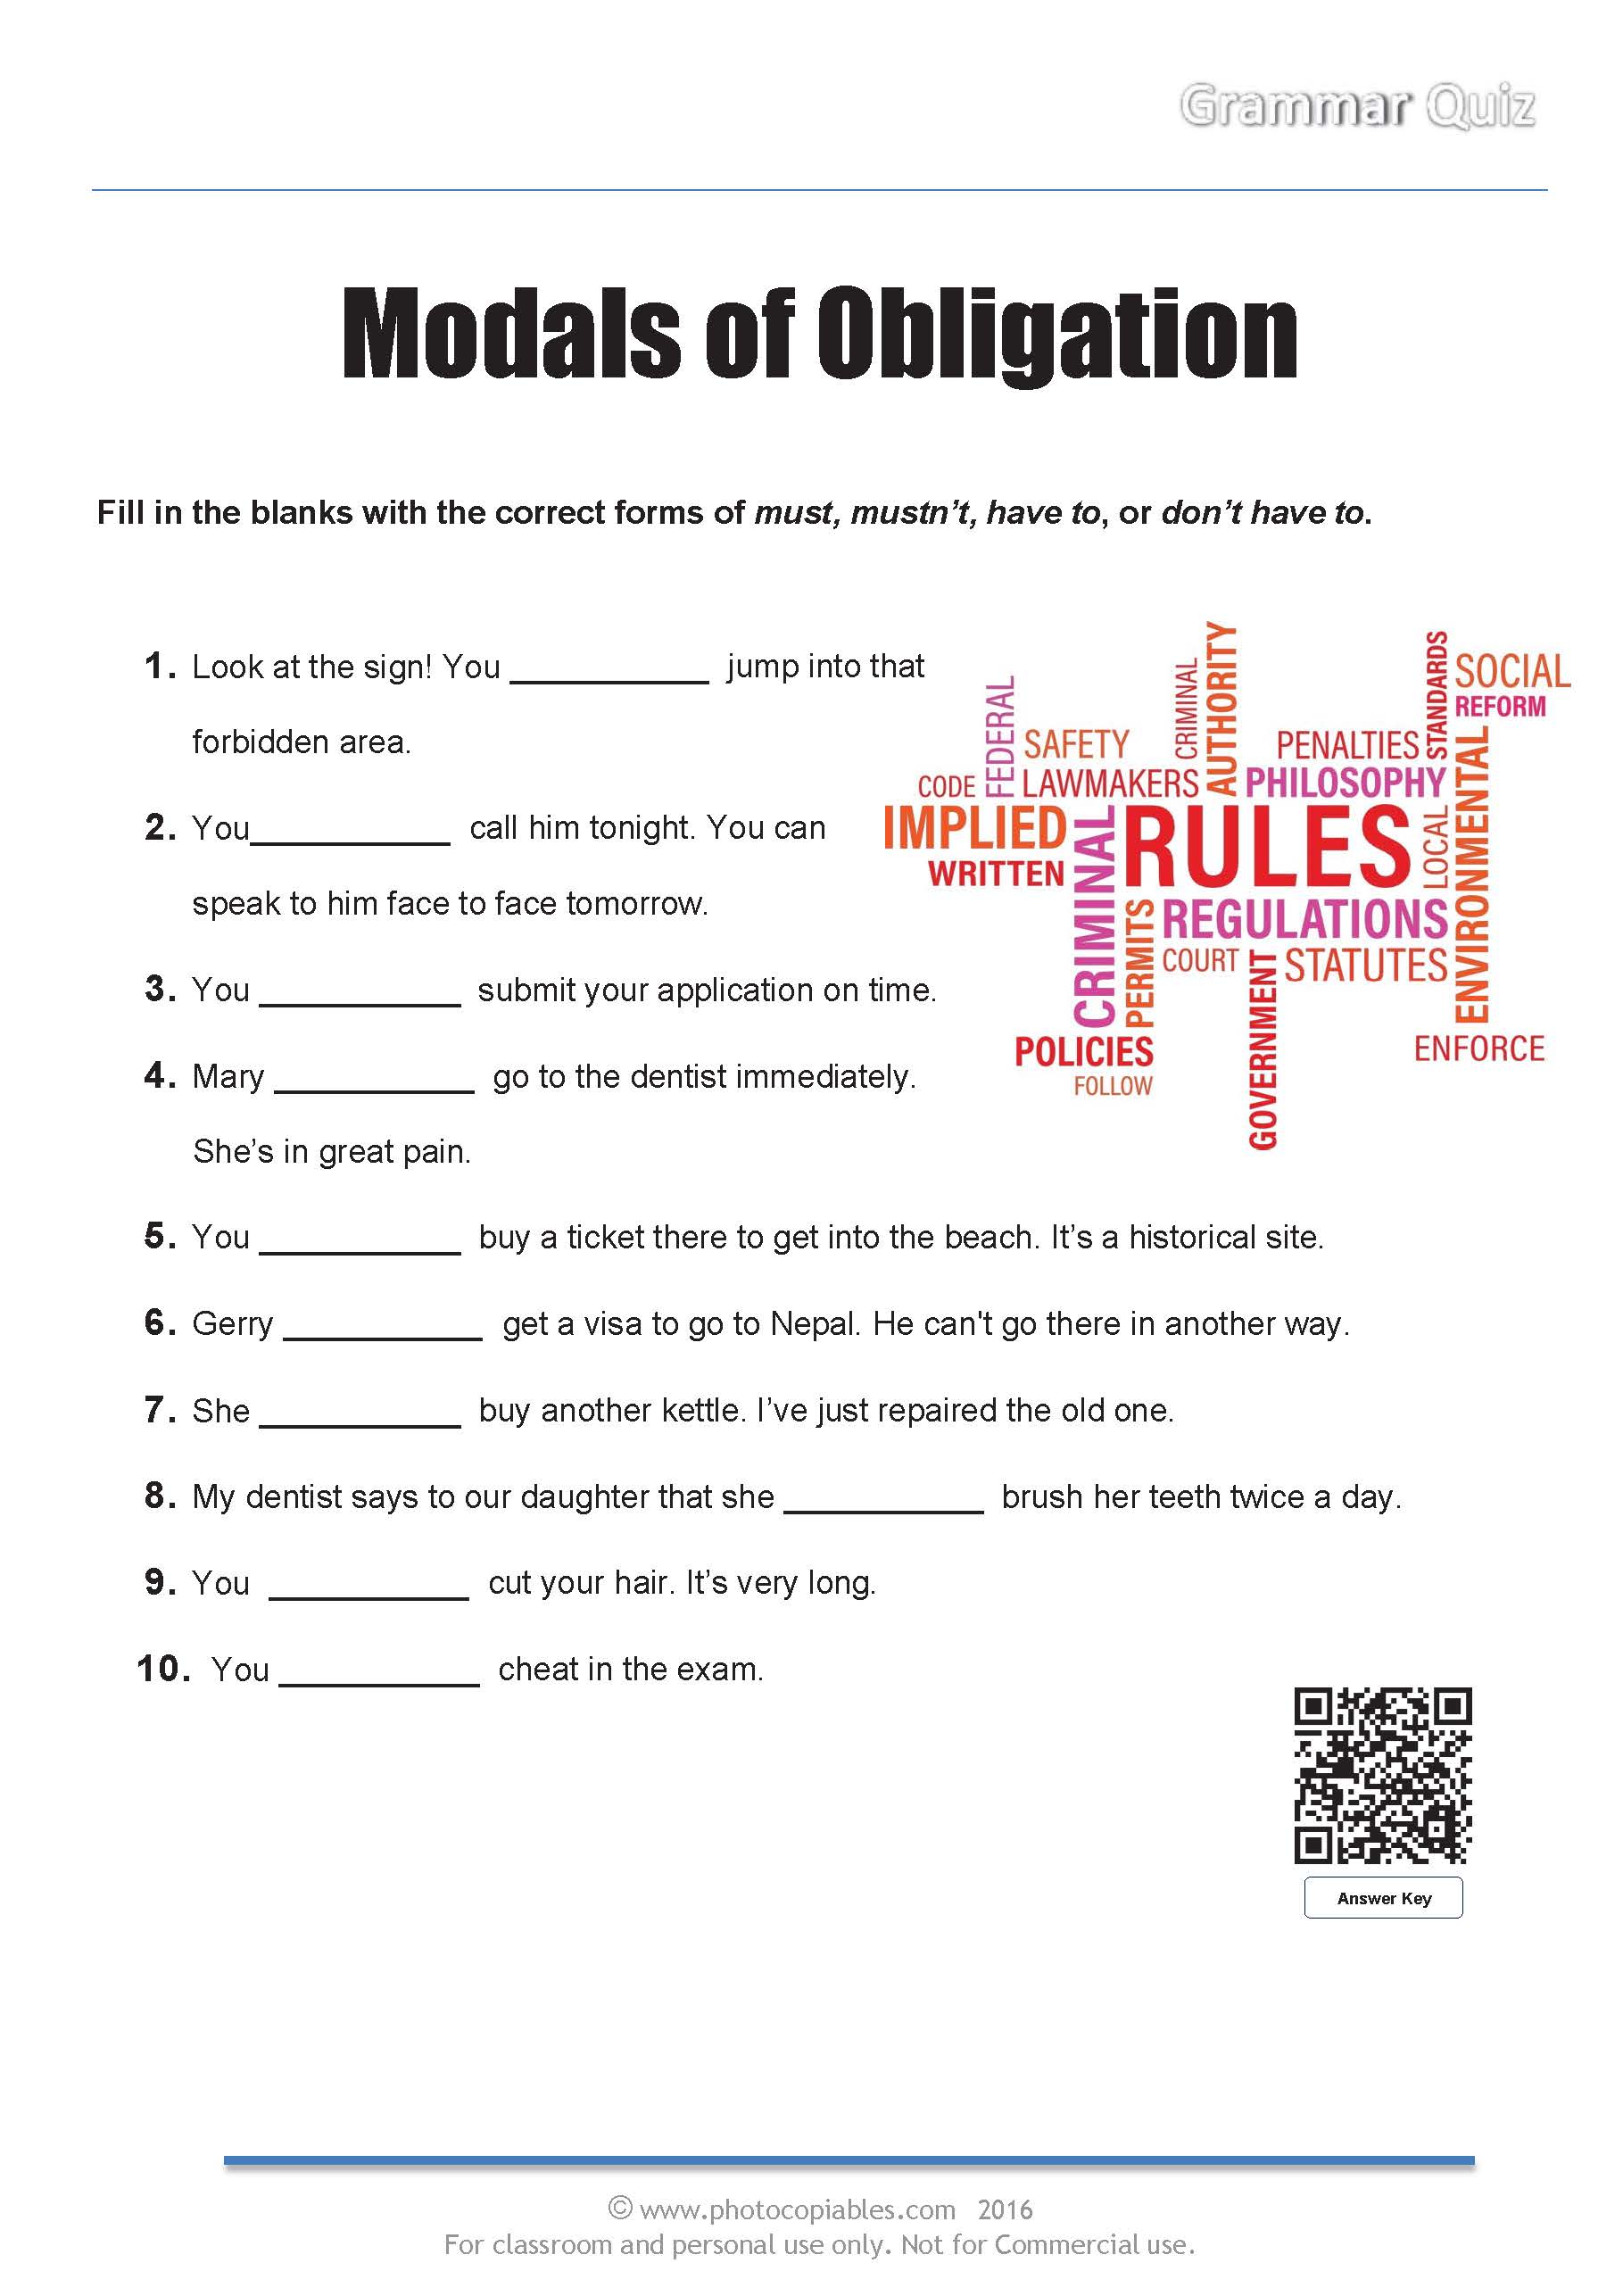 modals-of-obligation-quiz-photocopiables